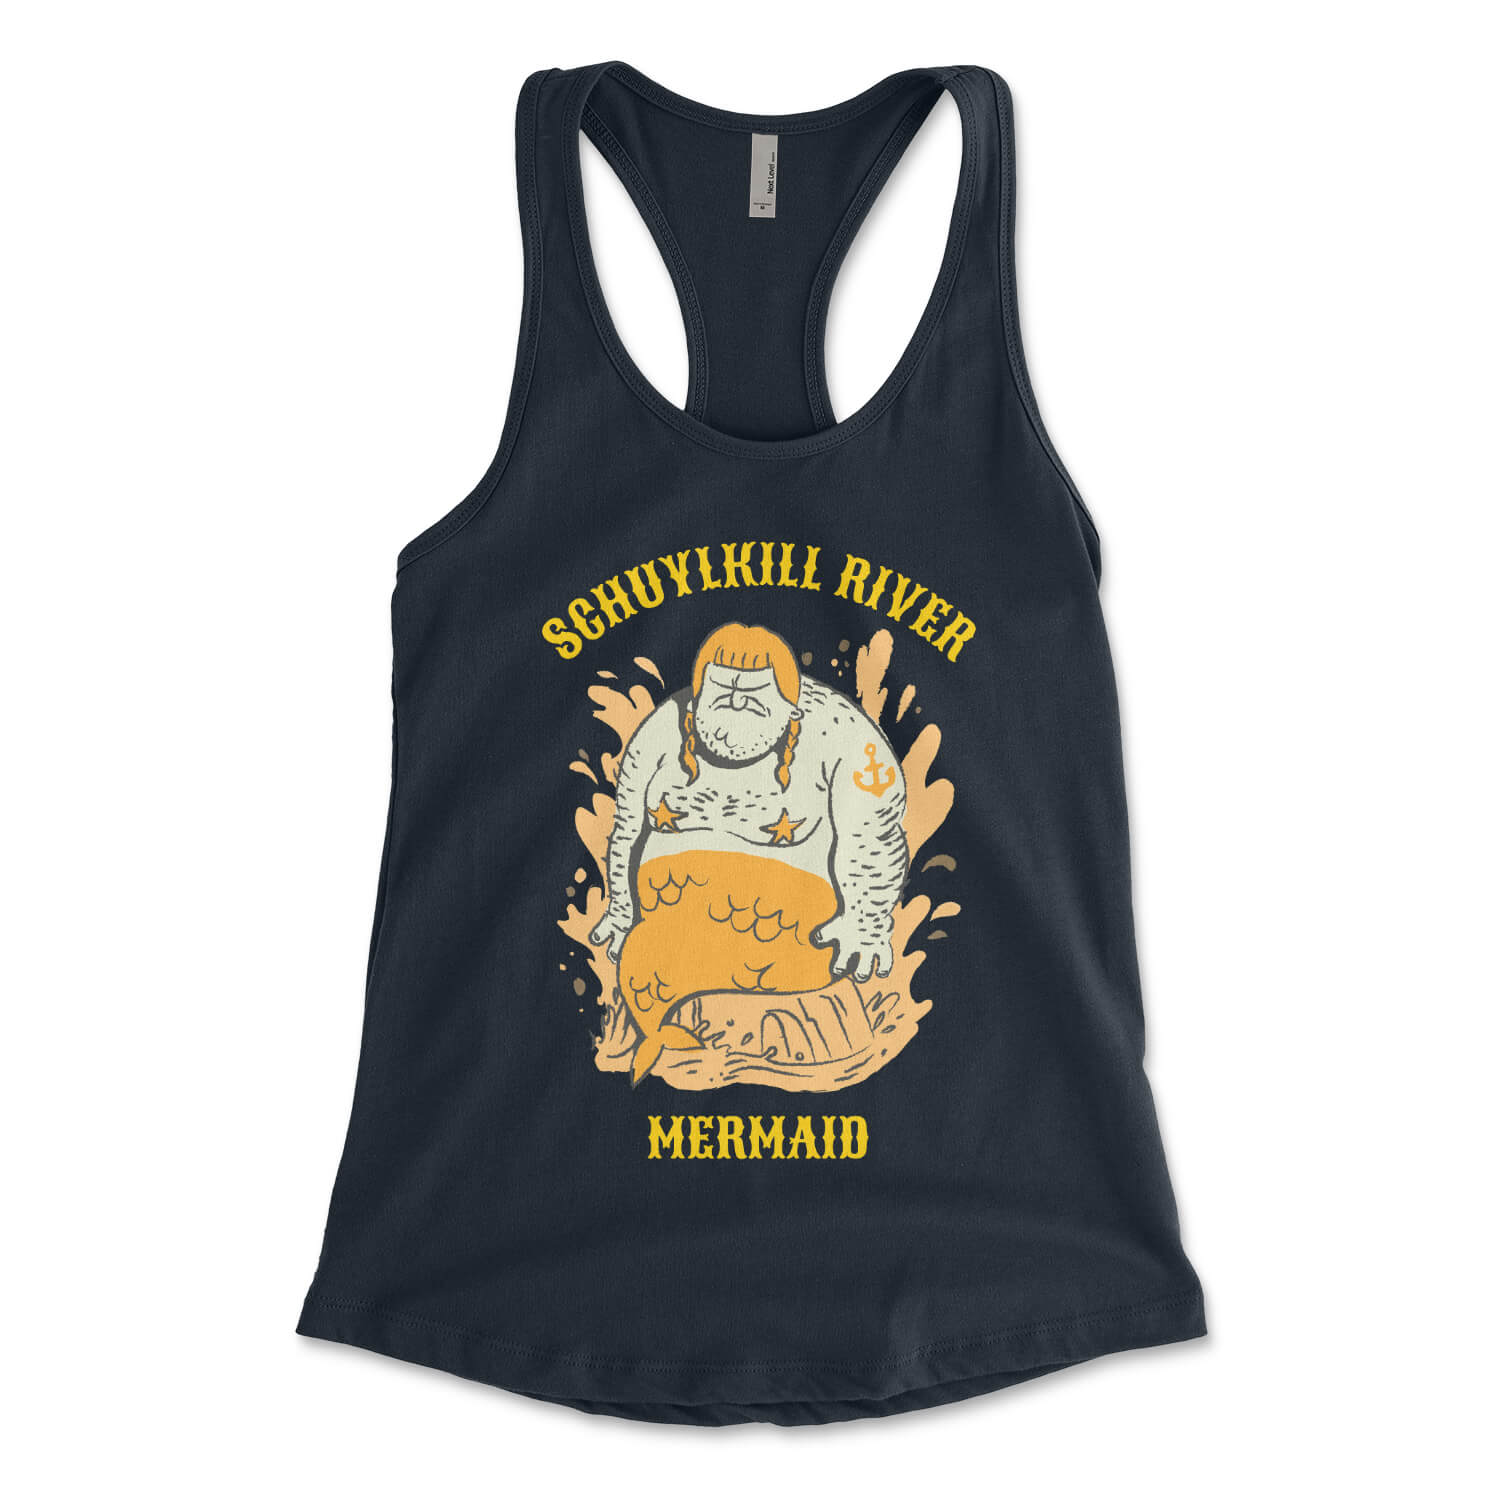 Philadelphia Schuylkill River Mermaid vintage midnight navy blue womens racerback tank top from Phillygoat